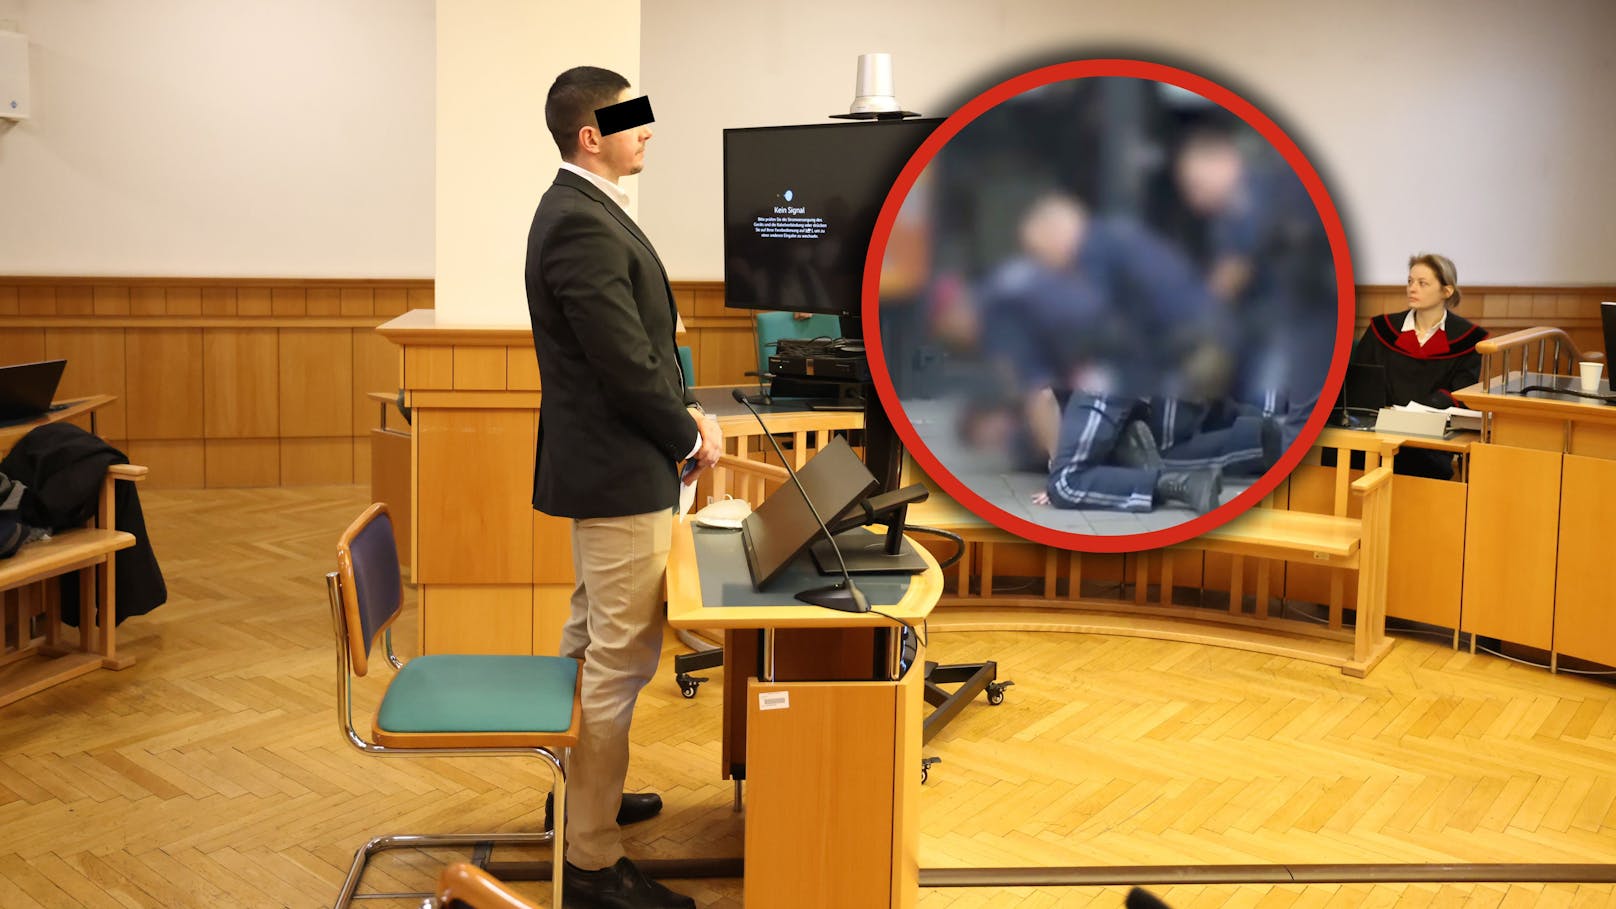 "Kopf gegen Boden gedonnert" – Polizist vor Gericht